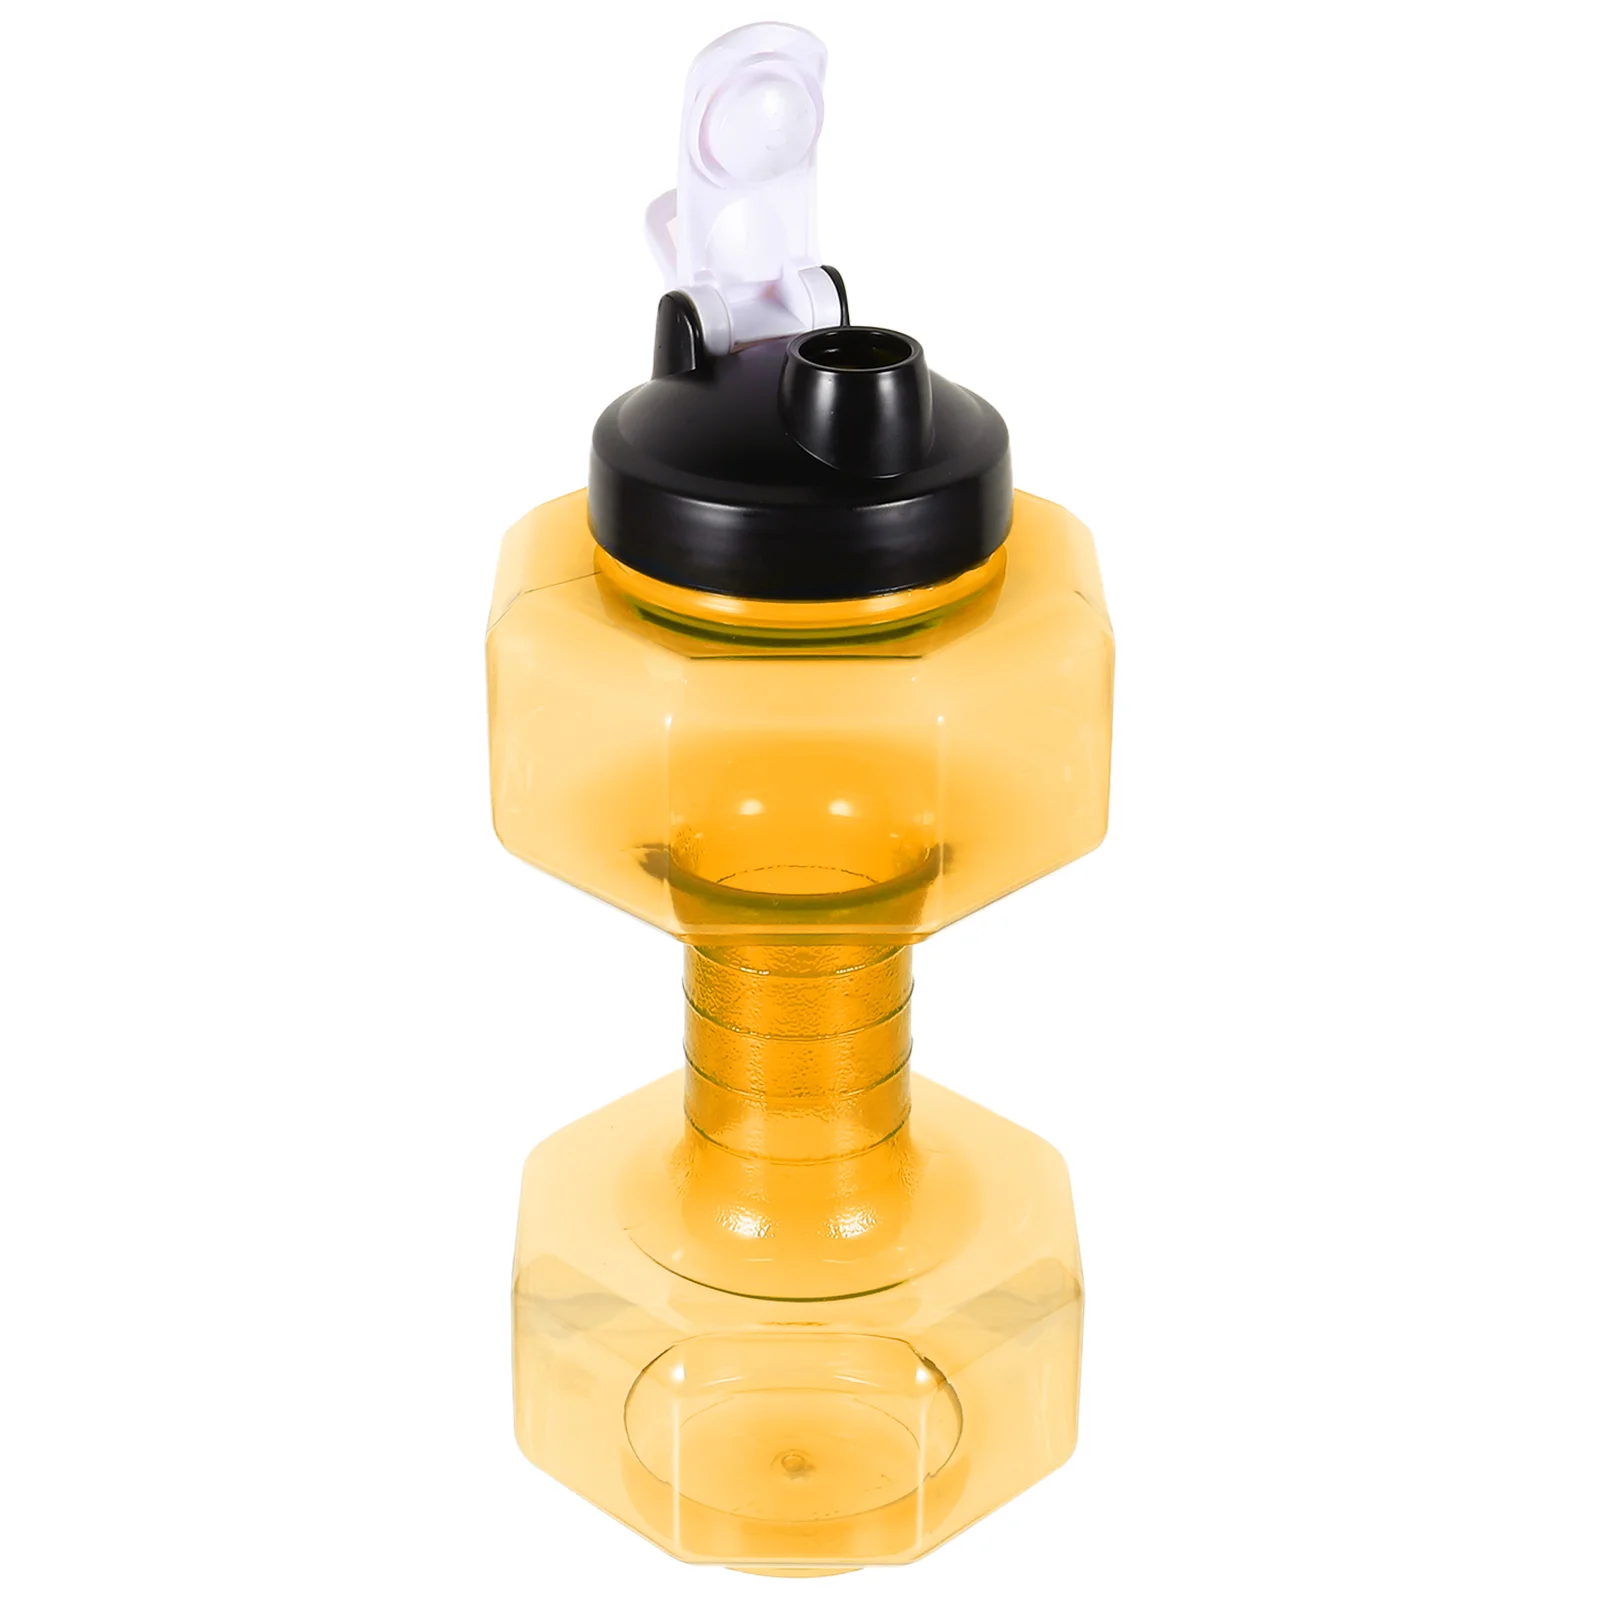 

Dumbbell Water Bottle Dumbbells Adjustable Workout Weight Kettle Drinking Sports Dumbell Dumbells Filled Hand Leakproof Fitness